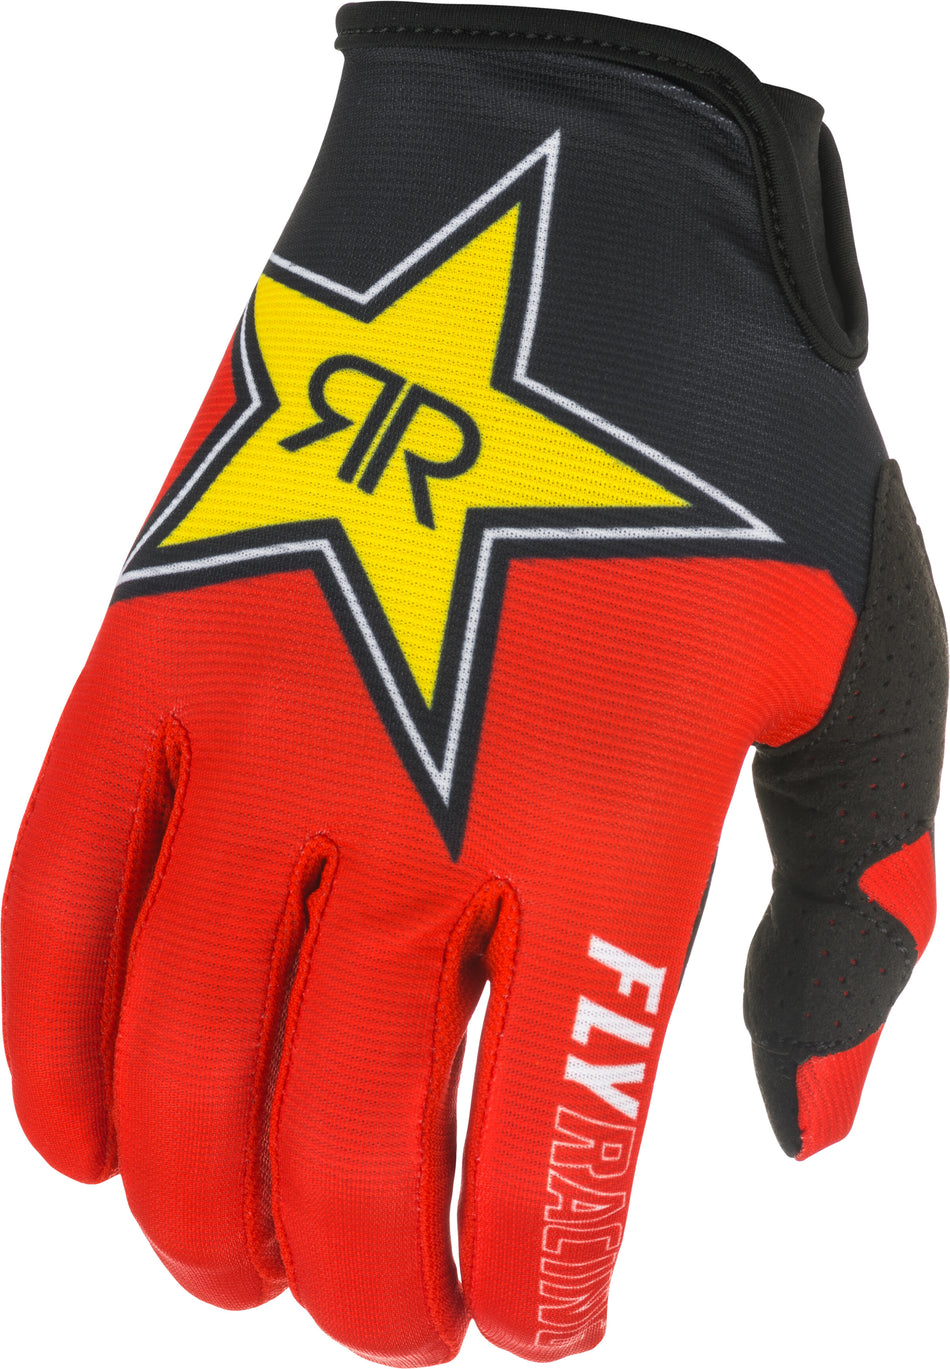 FLY RACING Lite Rockstar Gloves Black/Red/Yellow Sz 12 374-01312